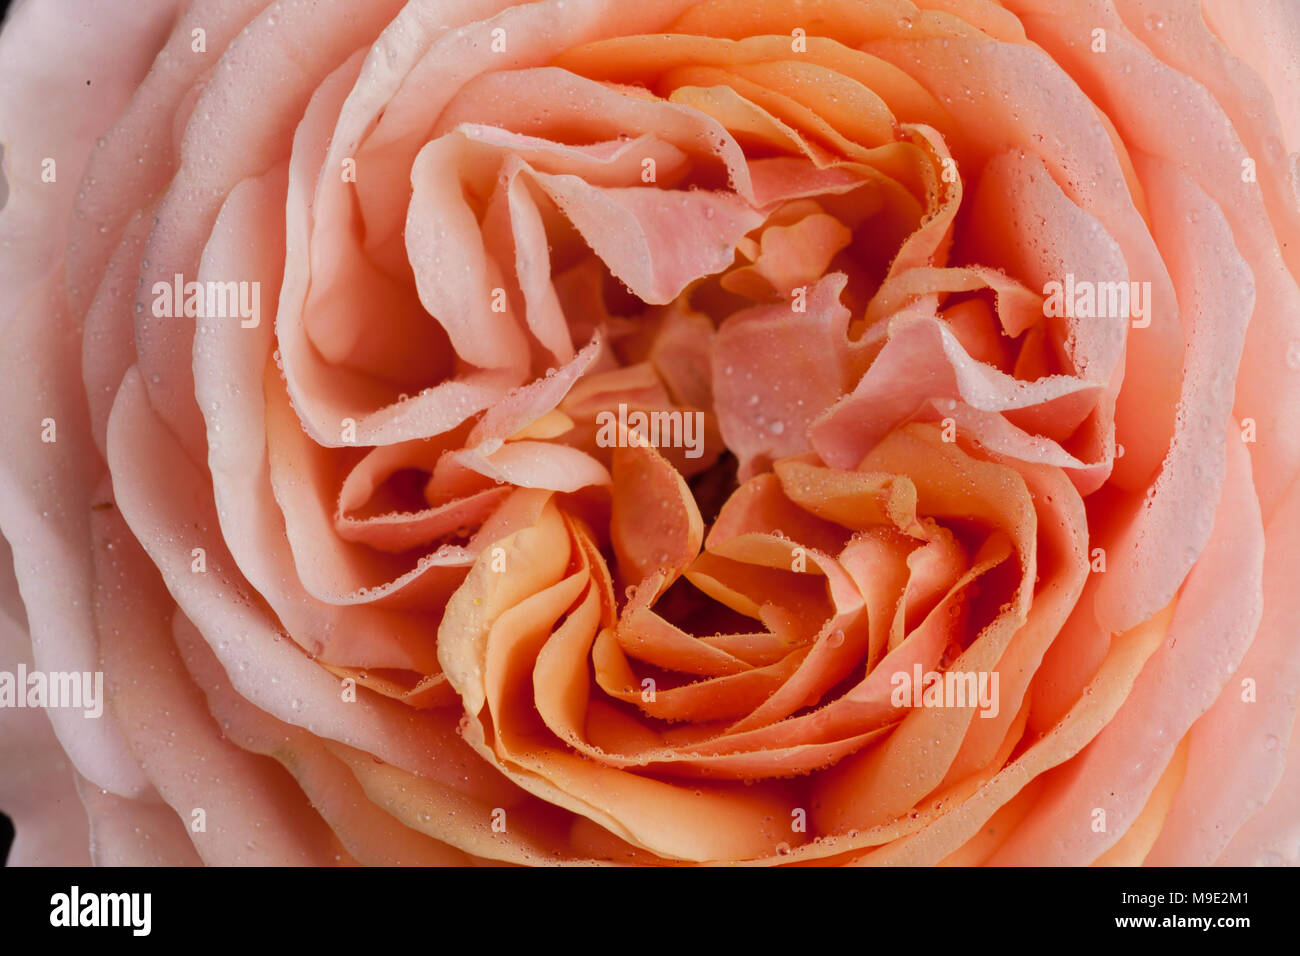 'Charles Austin, Ausfather' English Rose, Engelsk ros (Rosa) Stock Photo